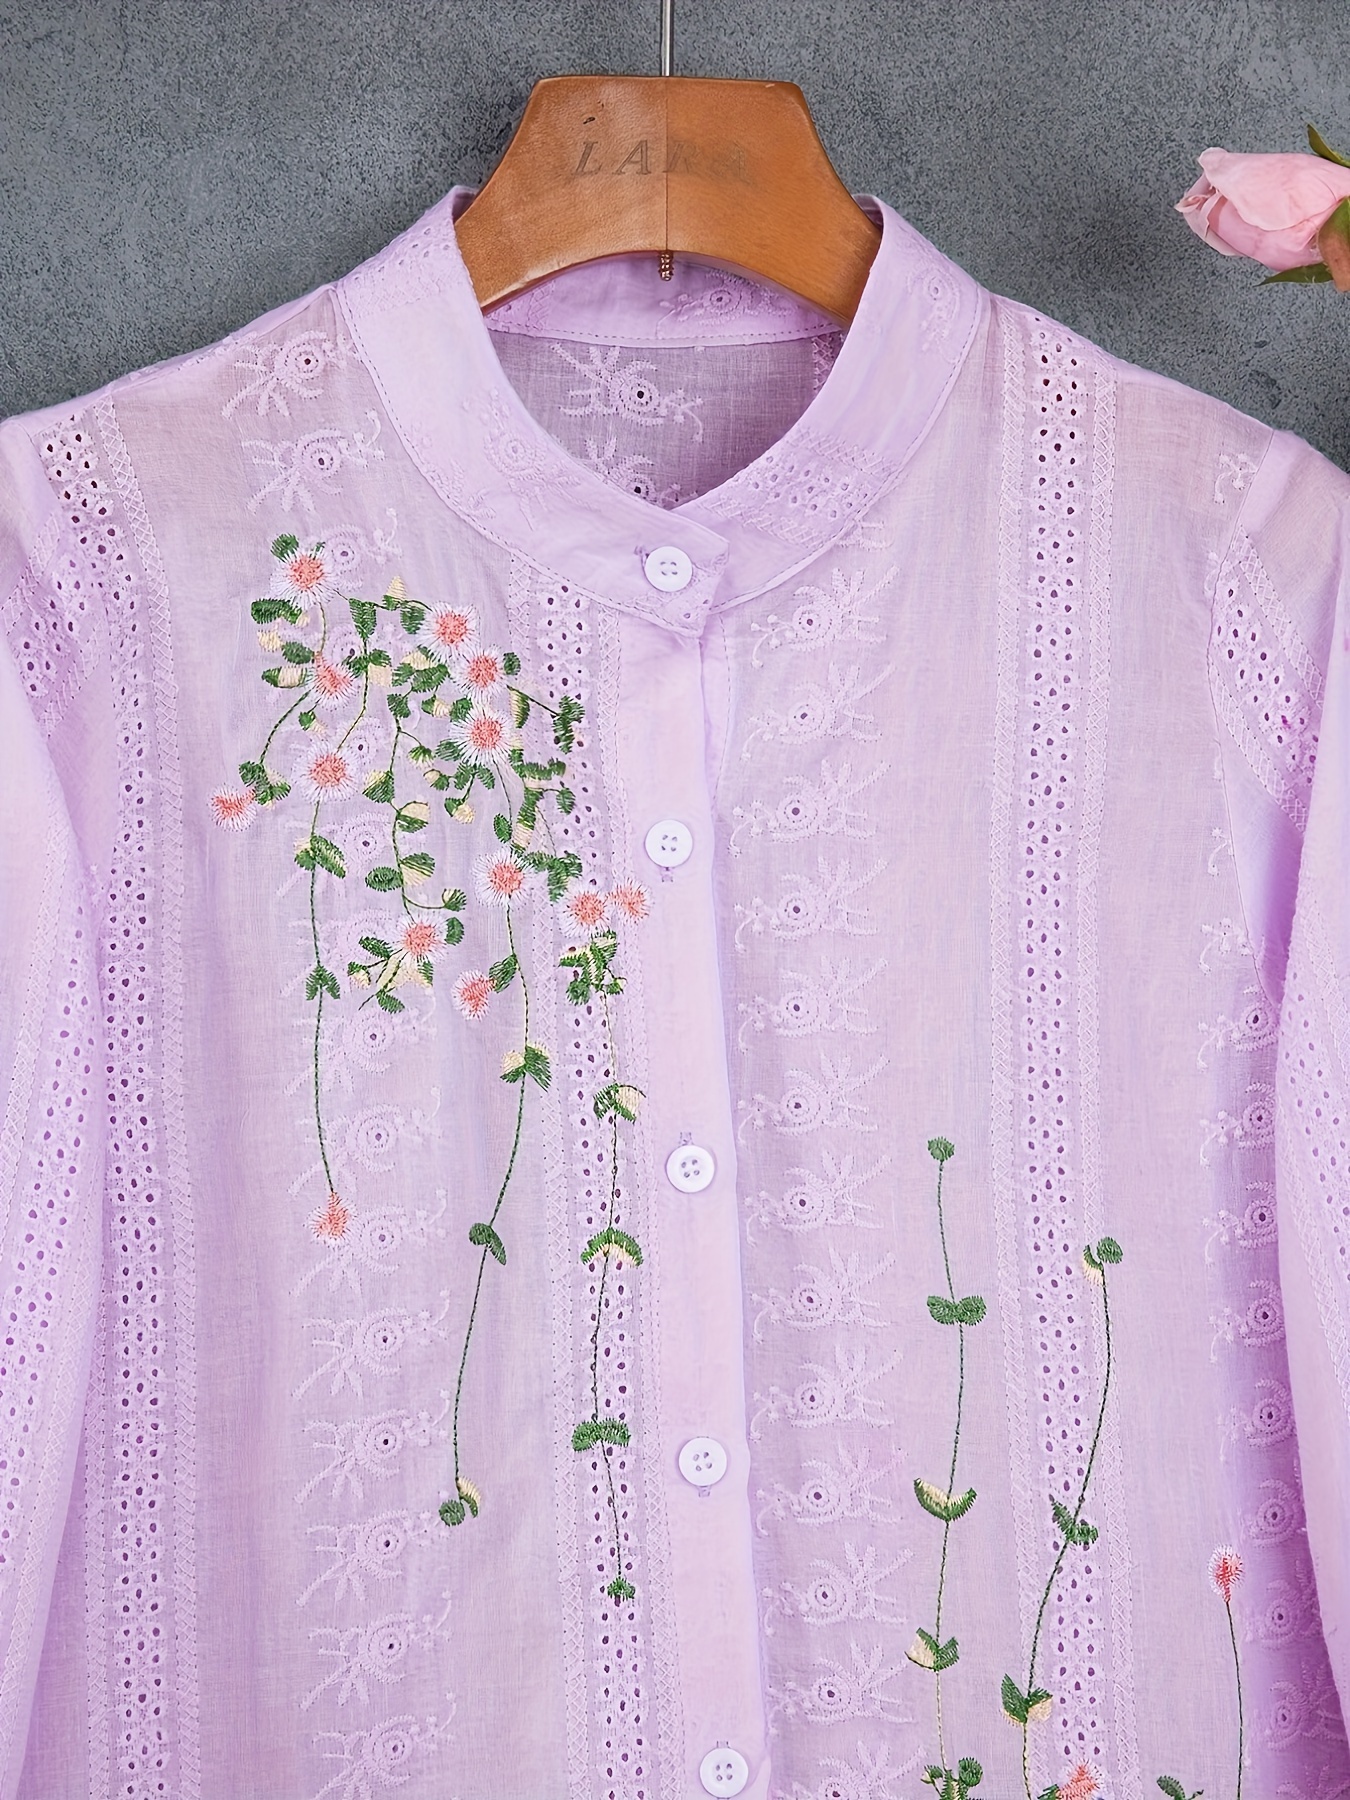 eyelet floral blouse elegant button front blouse for spring summer womens clothing details 2